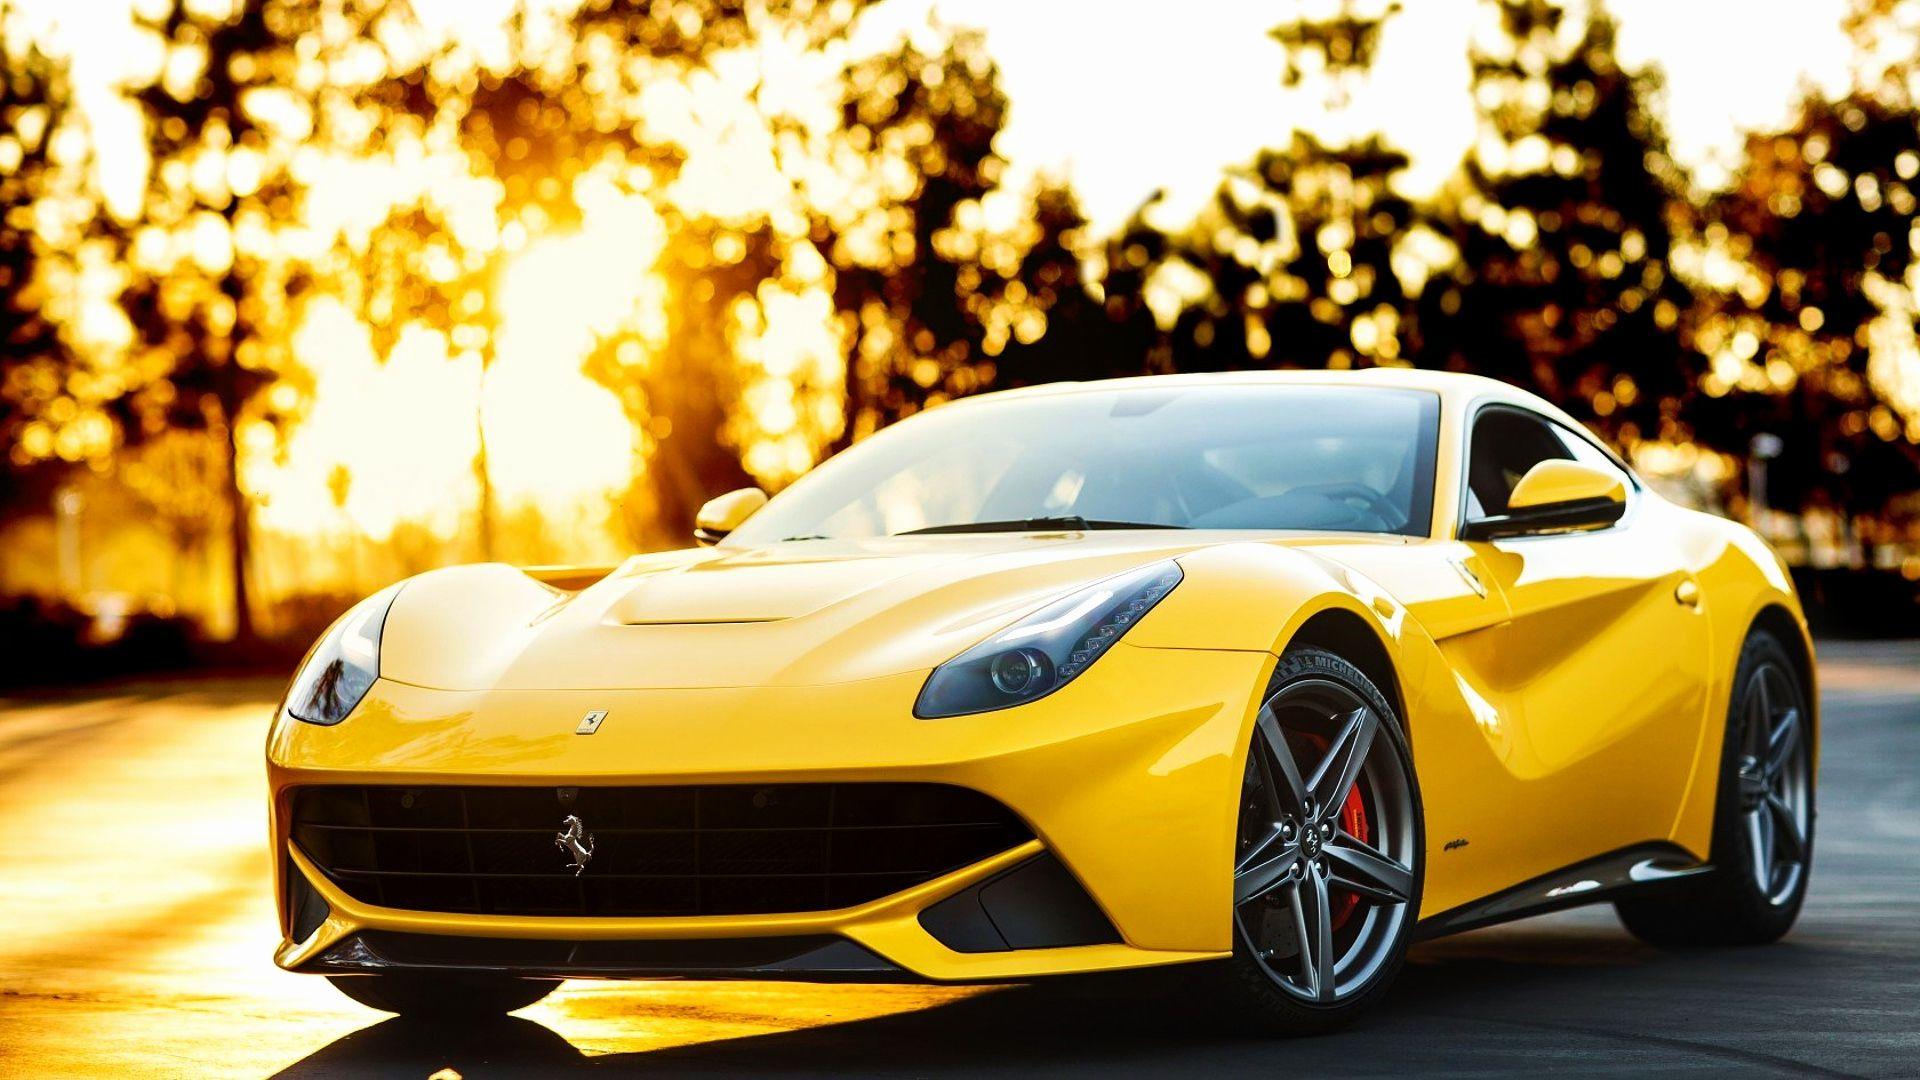 Ferrari Car HD Wallpapers - Top Free Ferrari Car HD Backgrounds